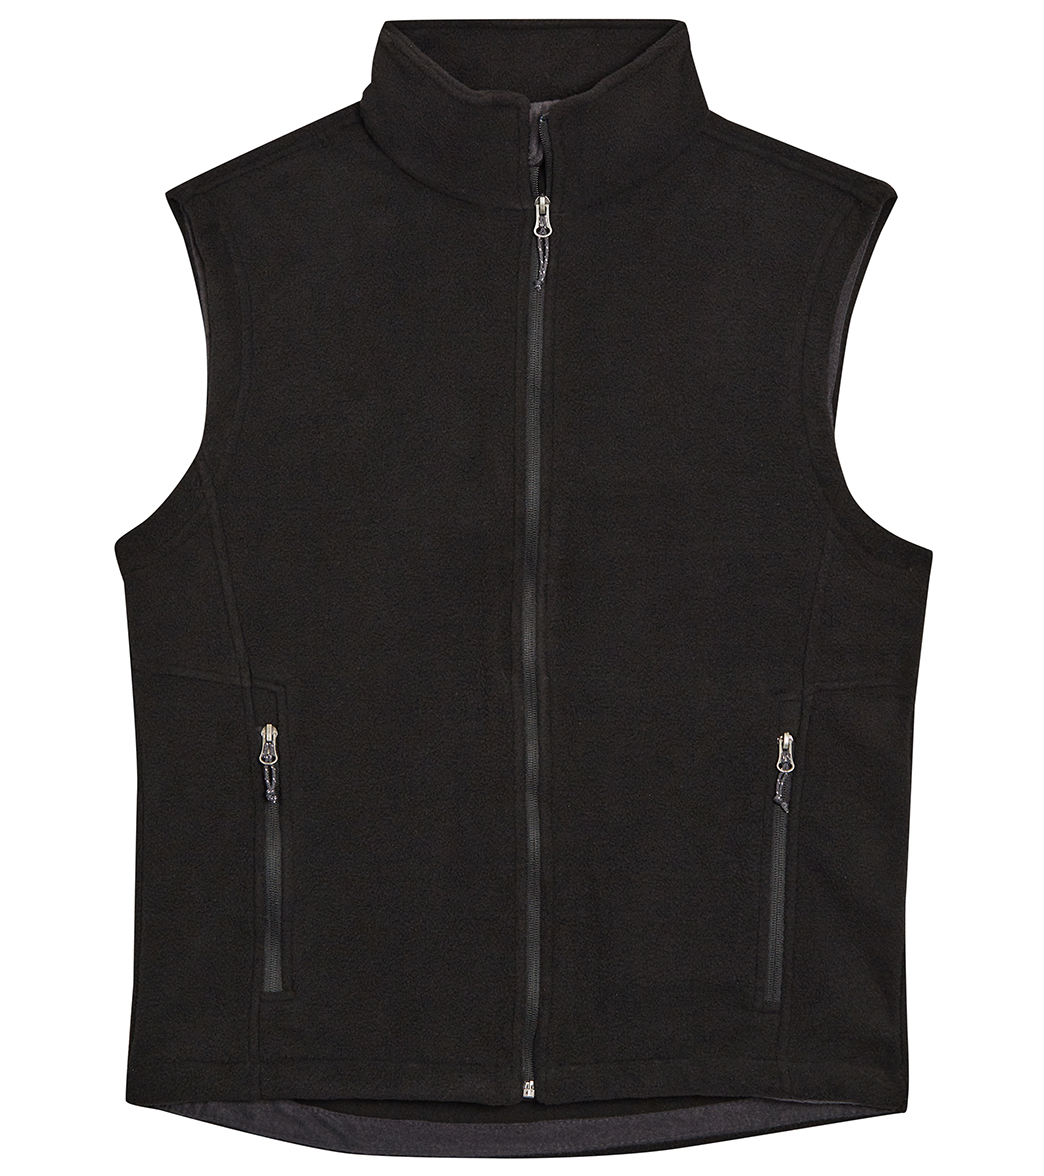 Men's Fleece Vest - Black Small Polyester - Swimoutlet.com